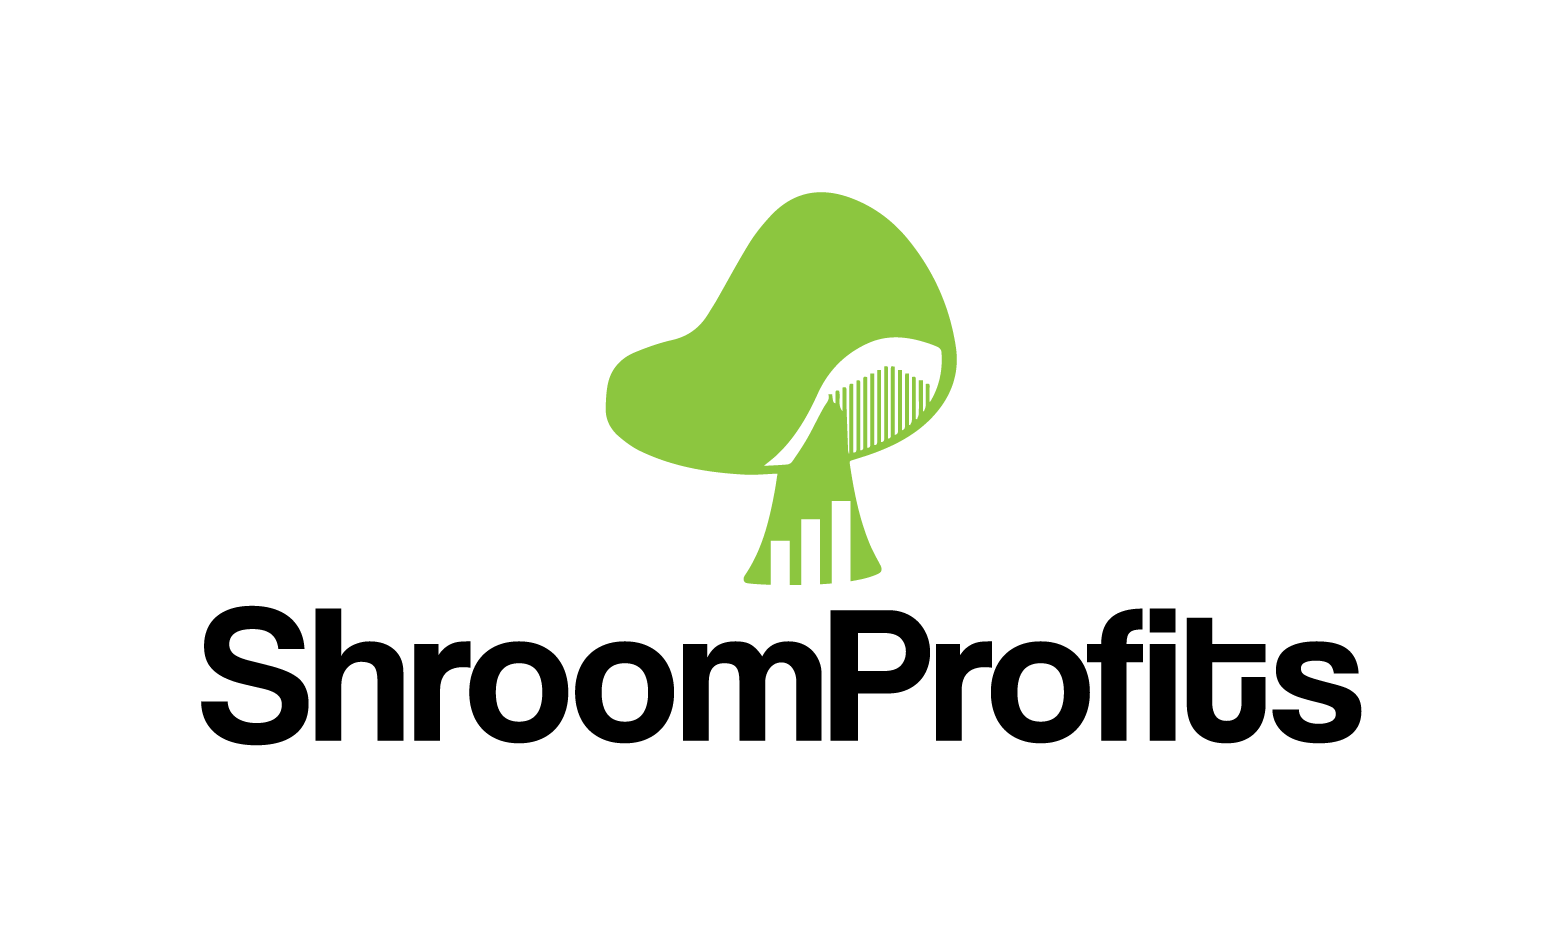 ShroomProfits.com - Creative brandable domain for sale